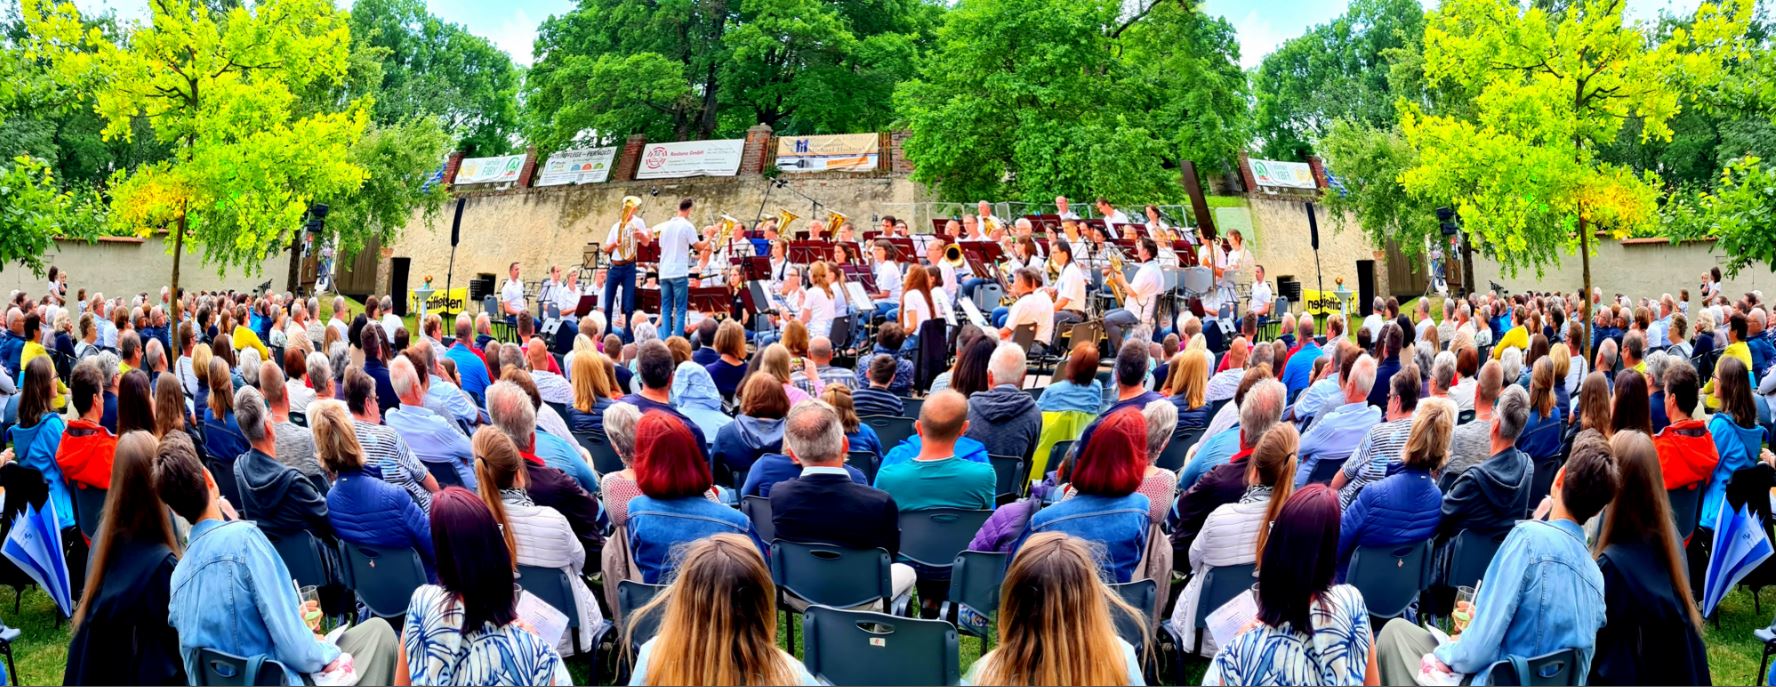 "Picknick-Konzert" - Sommer-Highlight in der Loamgstettn geplant